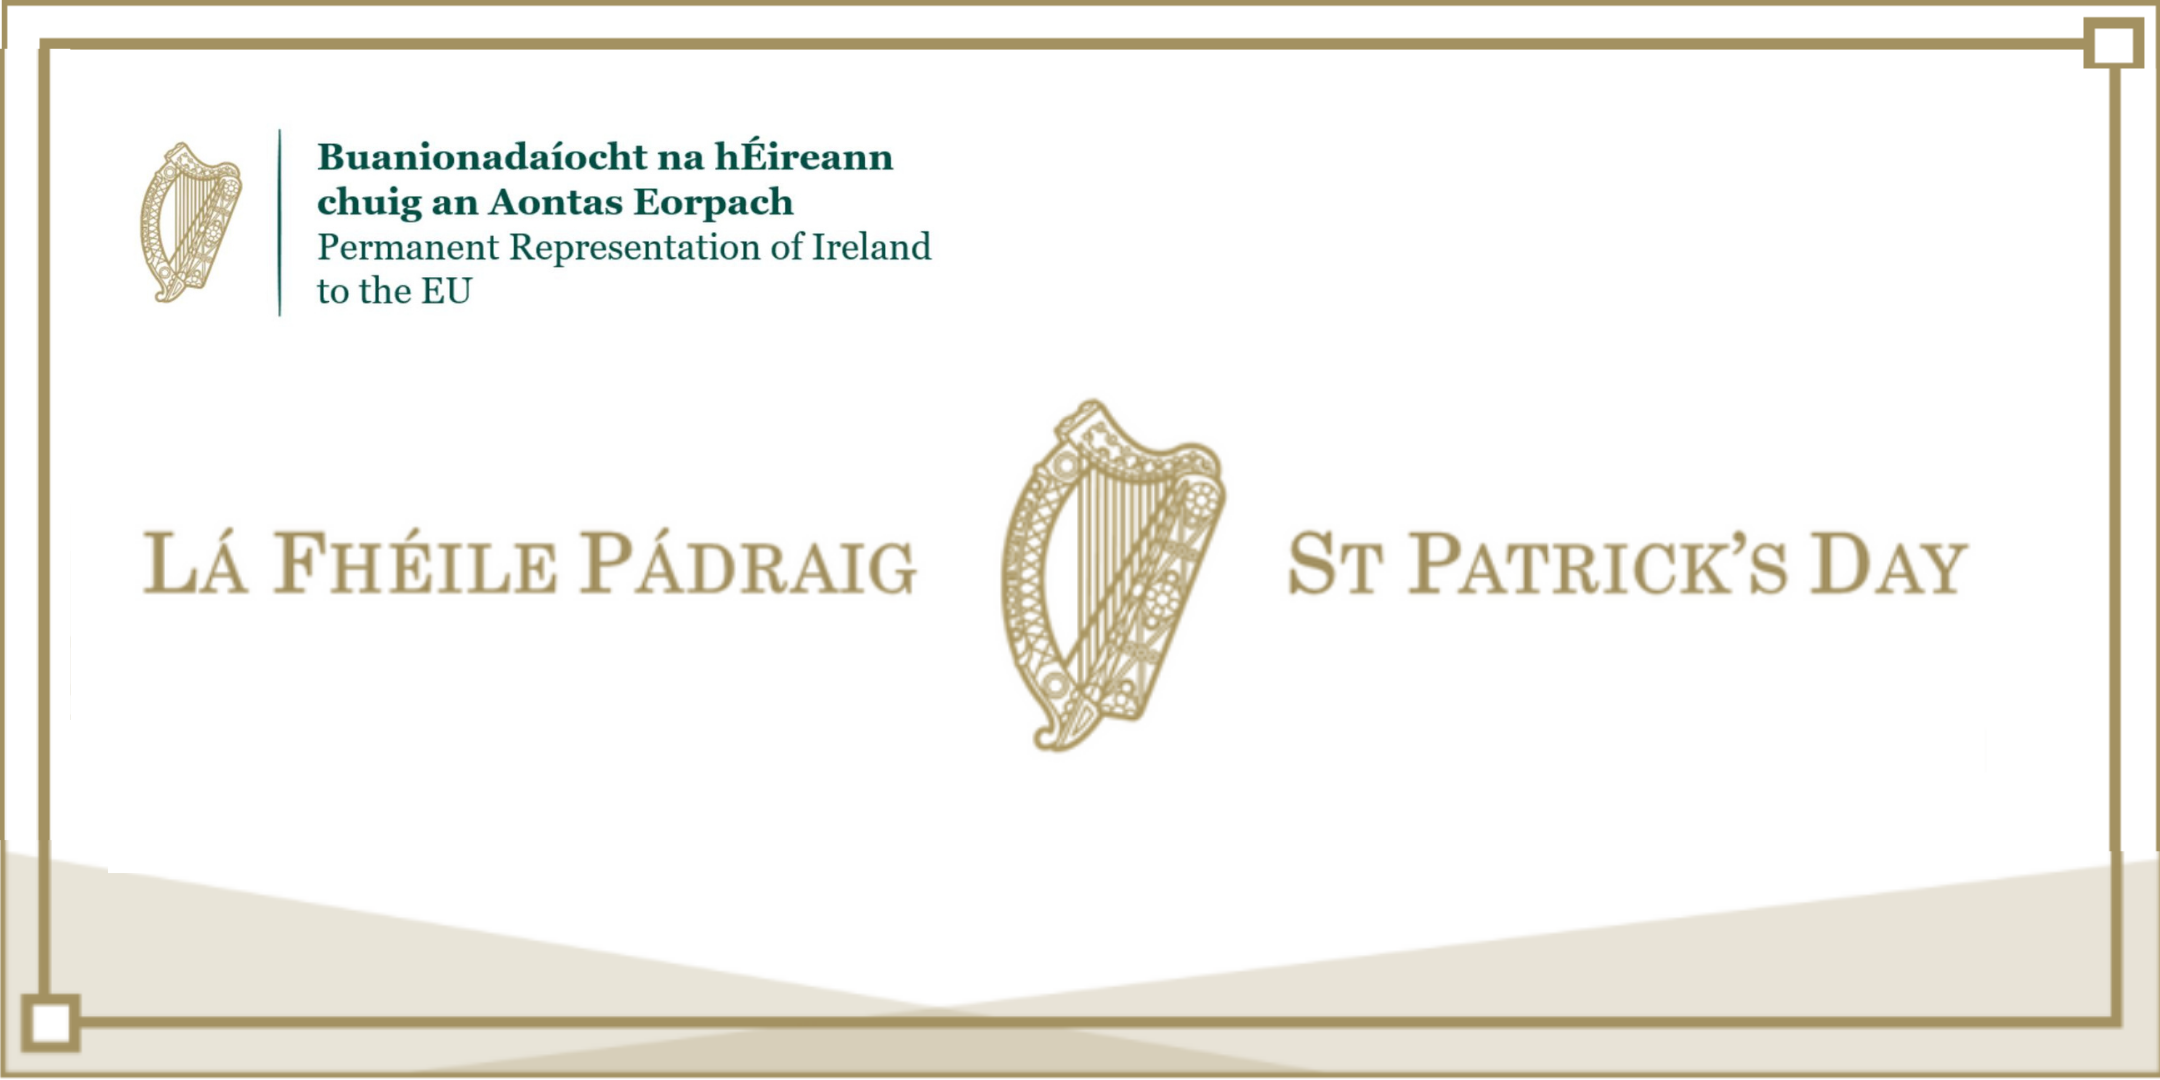 Permanent Representation of Ireland to the EU: Saint Patrick's Day 2021